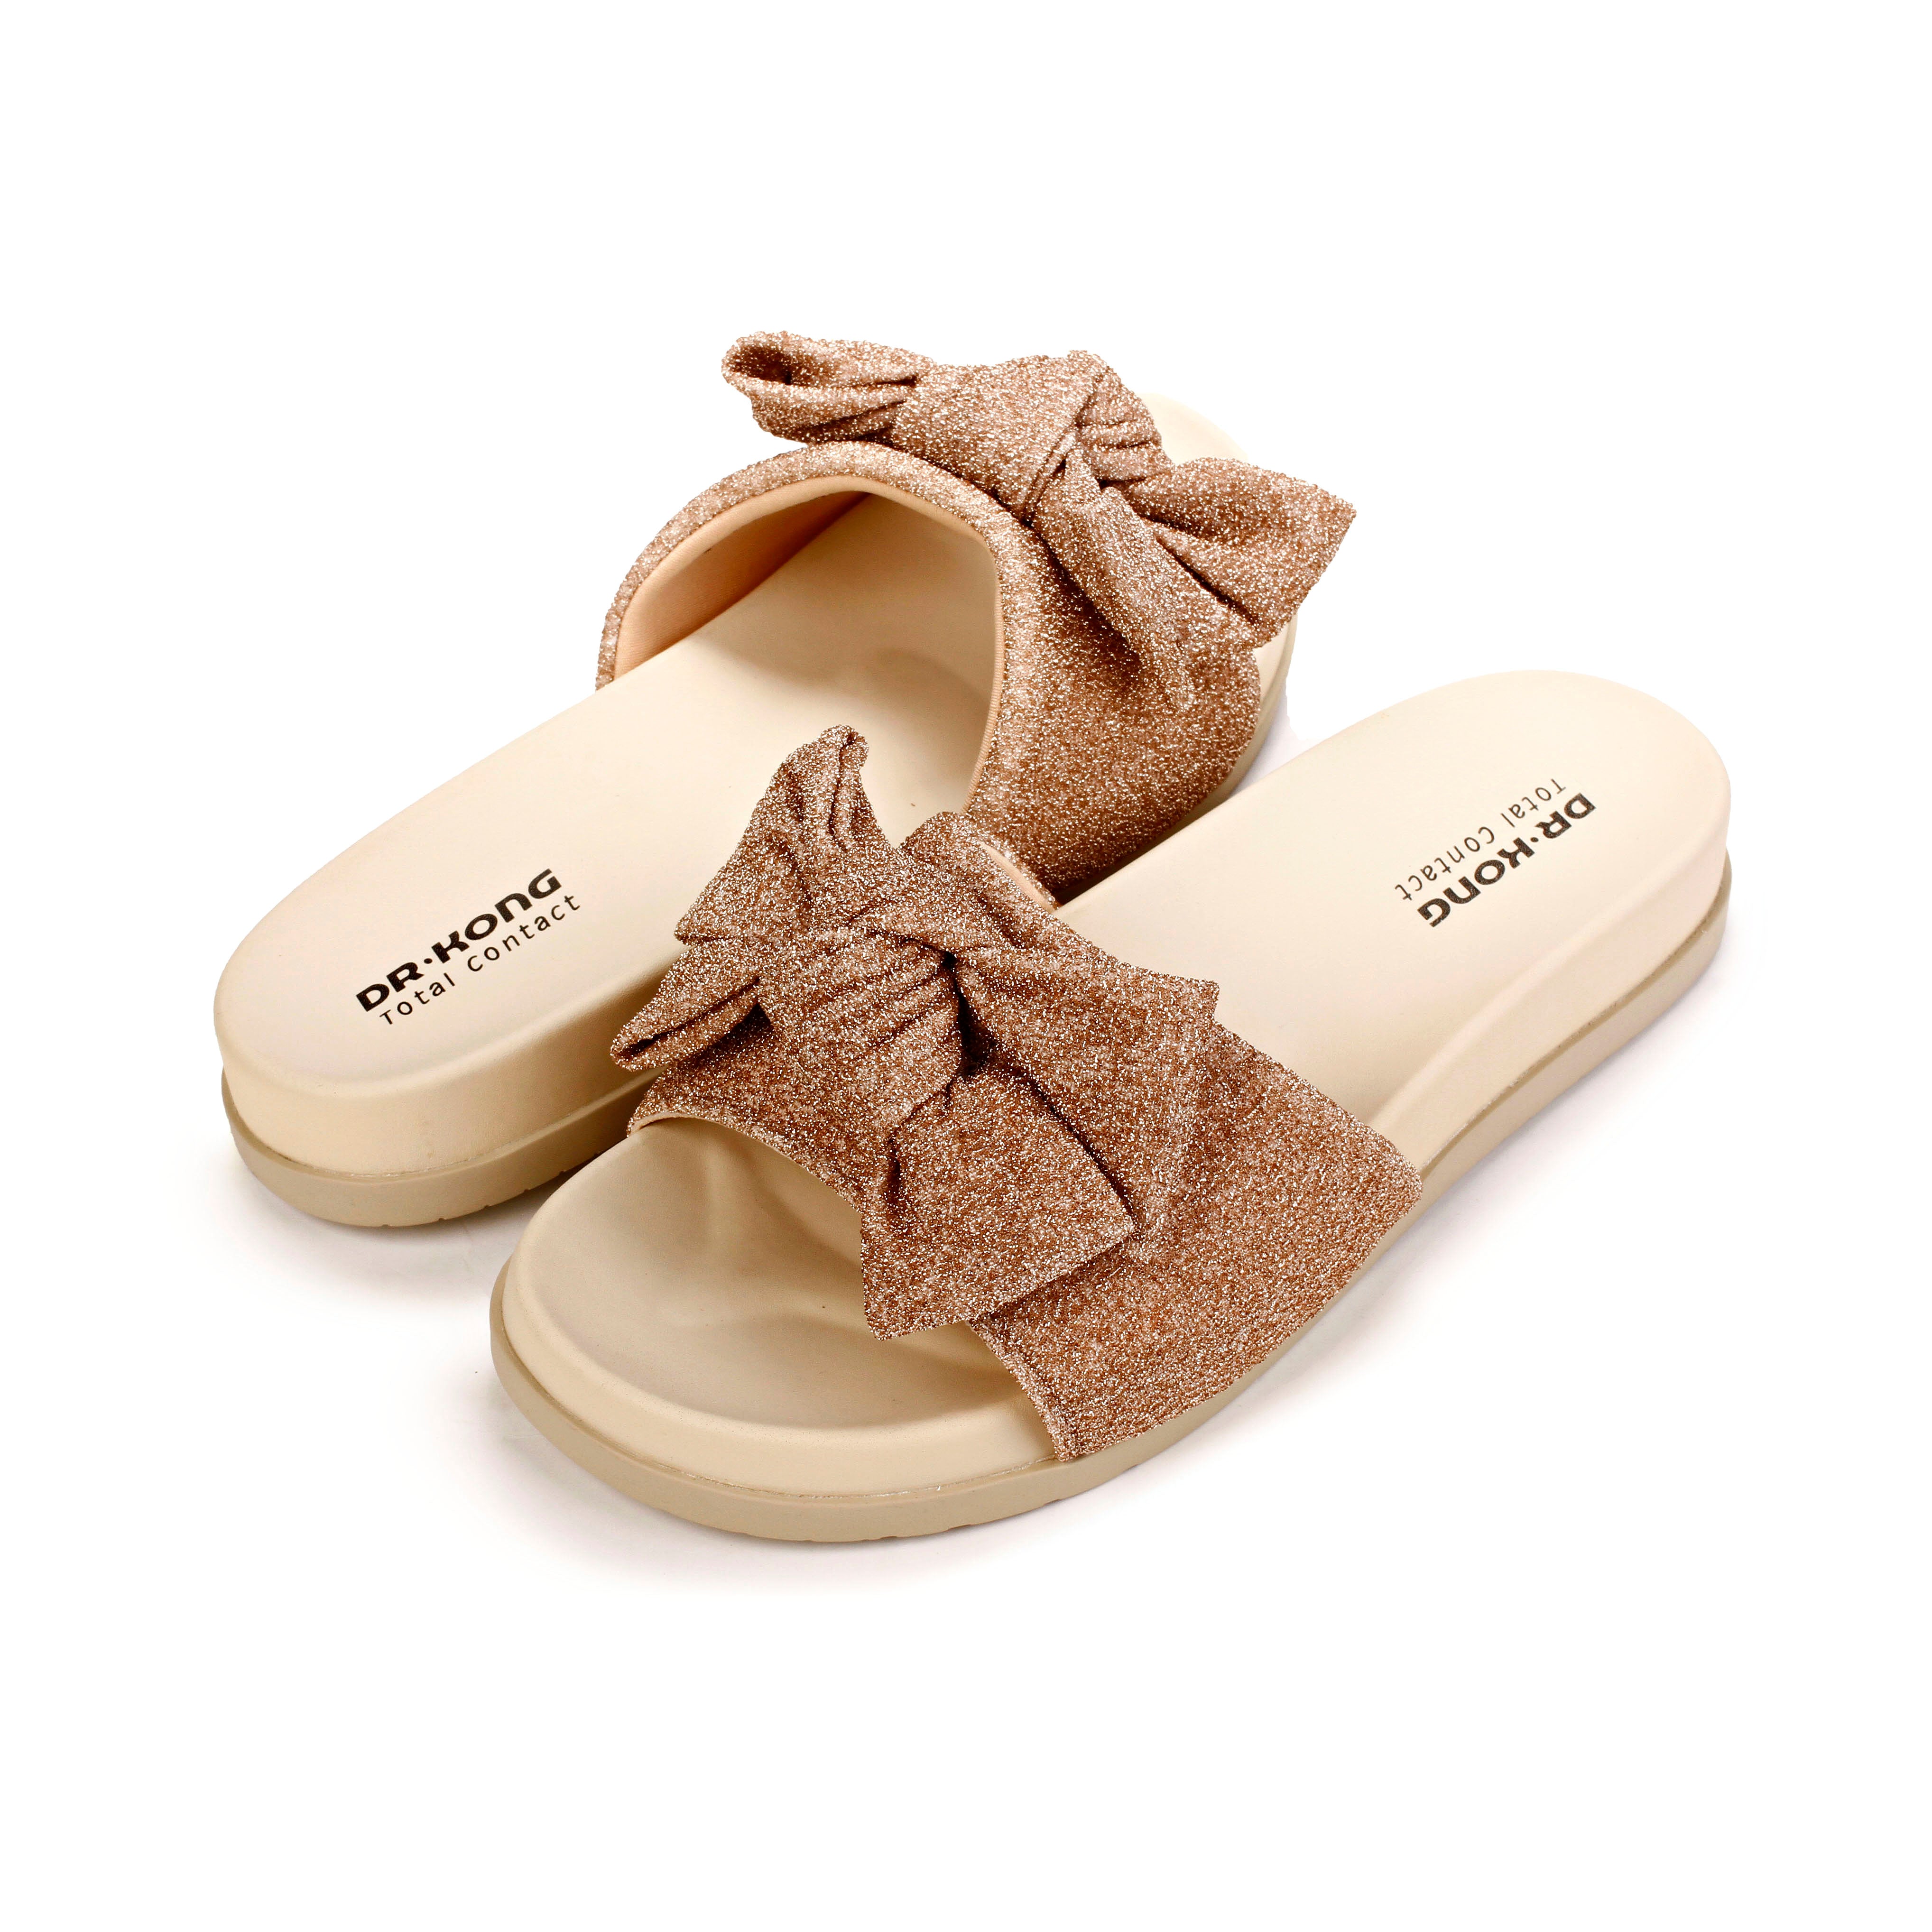 Dr. Kong Smart Footbed Women's Sandals S3001691